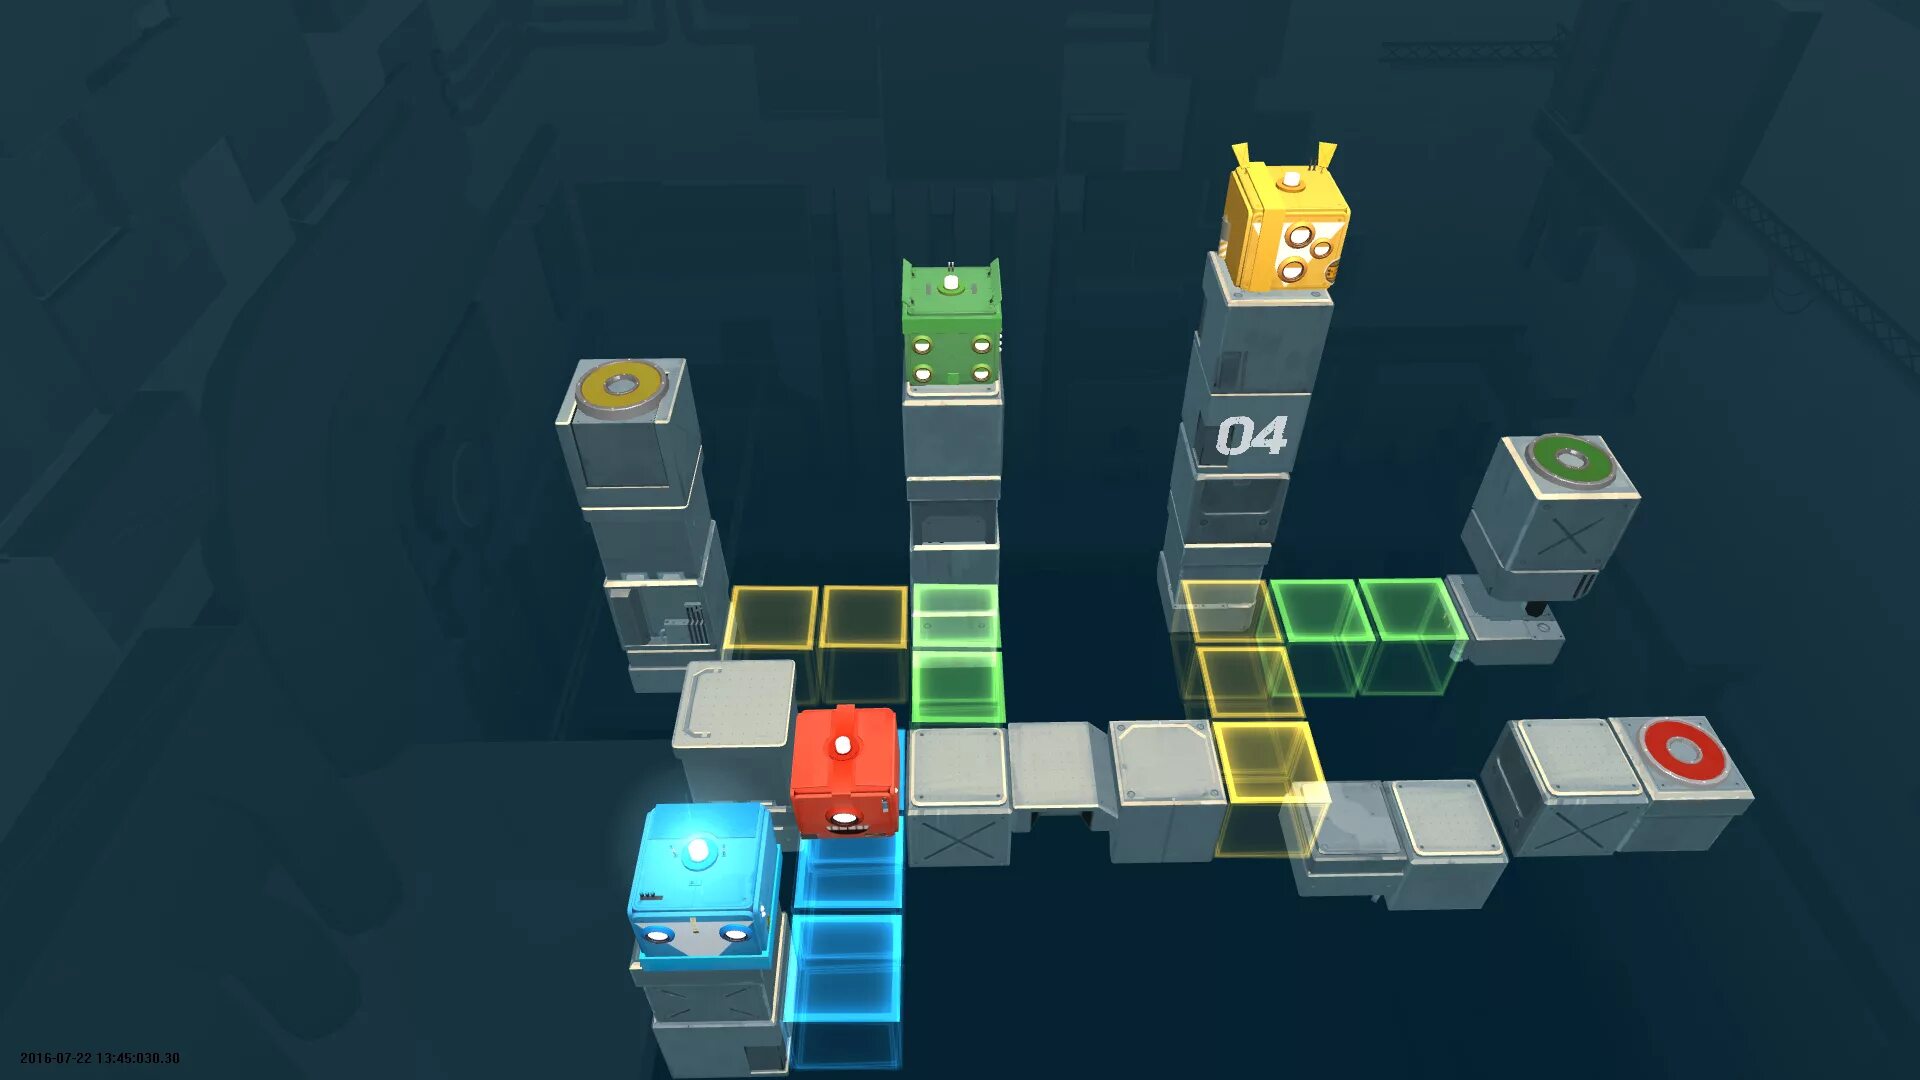 Death Squared игра. Cube (игра). Игра про кубических роботов. Компьютерная игра кубики. Взломка игра кубик